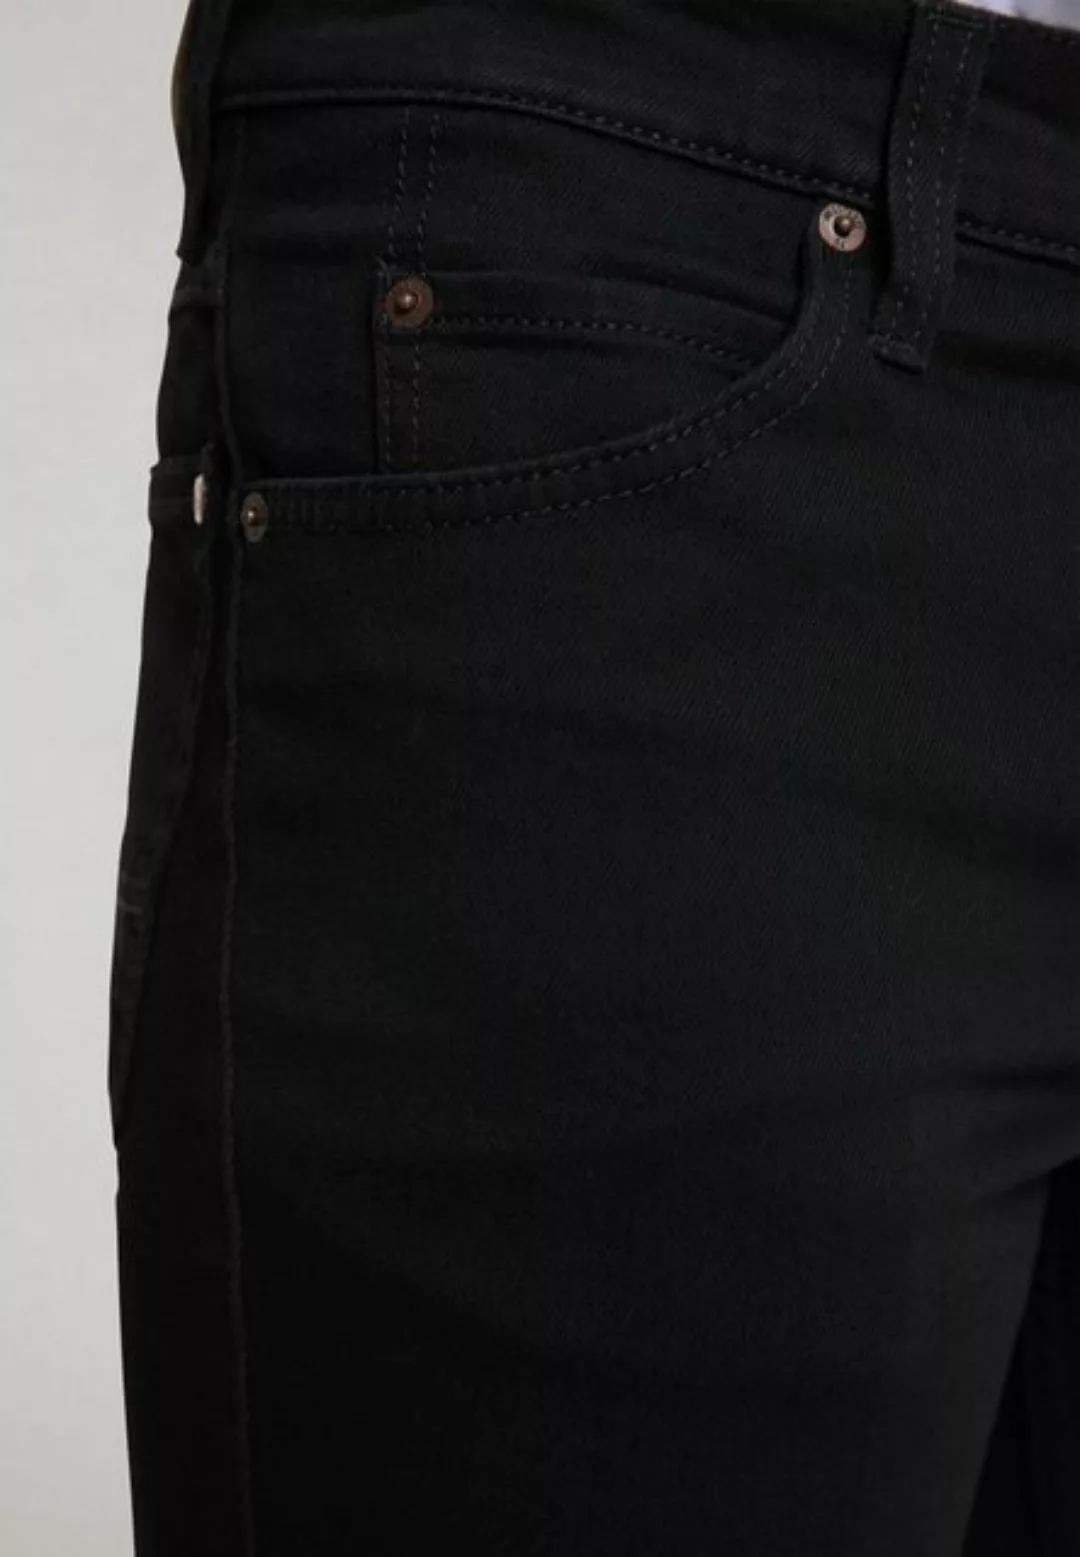 MUSTANG 5-Pocket-Jeans günstig online kaufen